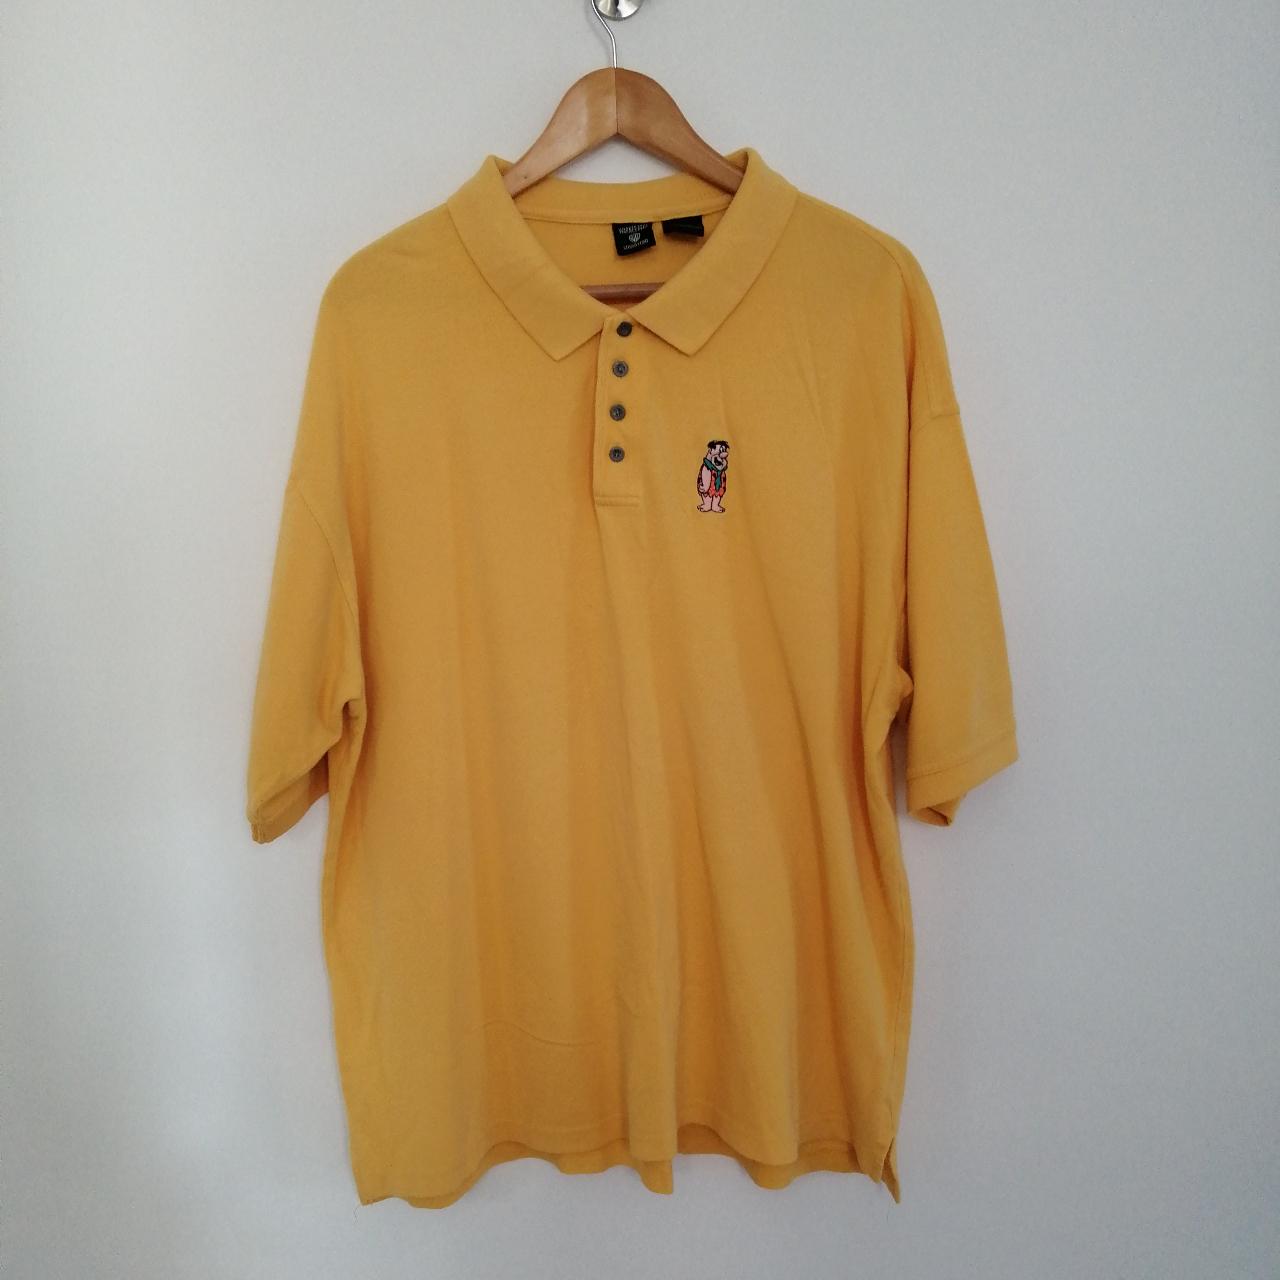 Bright yellow Fred Flintstone polo shirt by Warner... - Depop